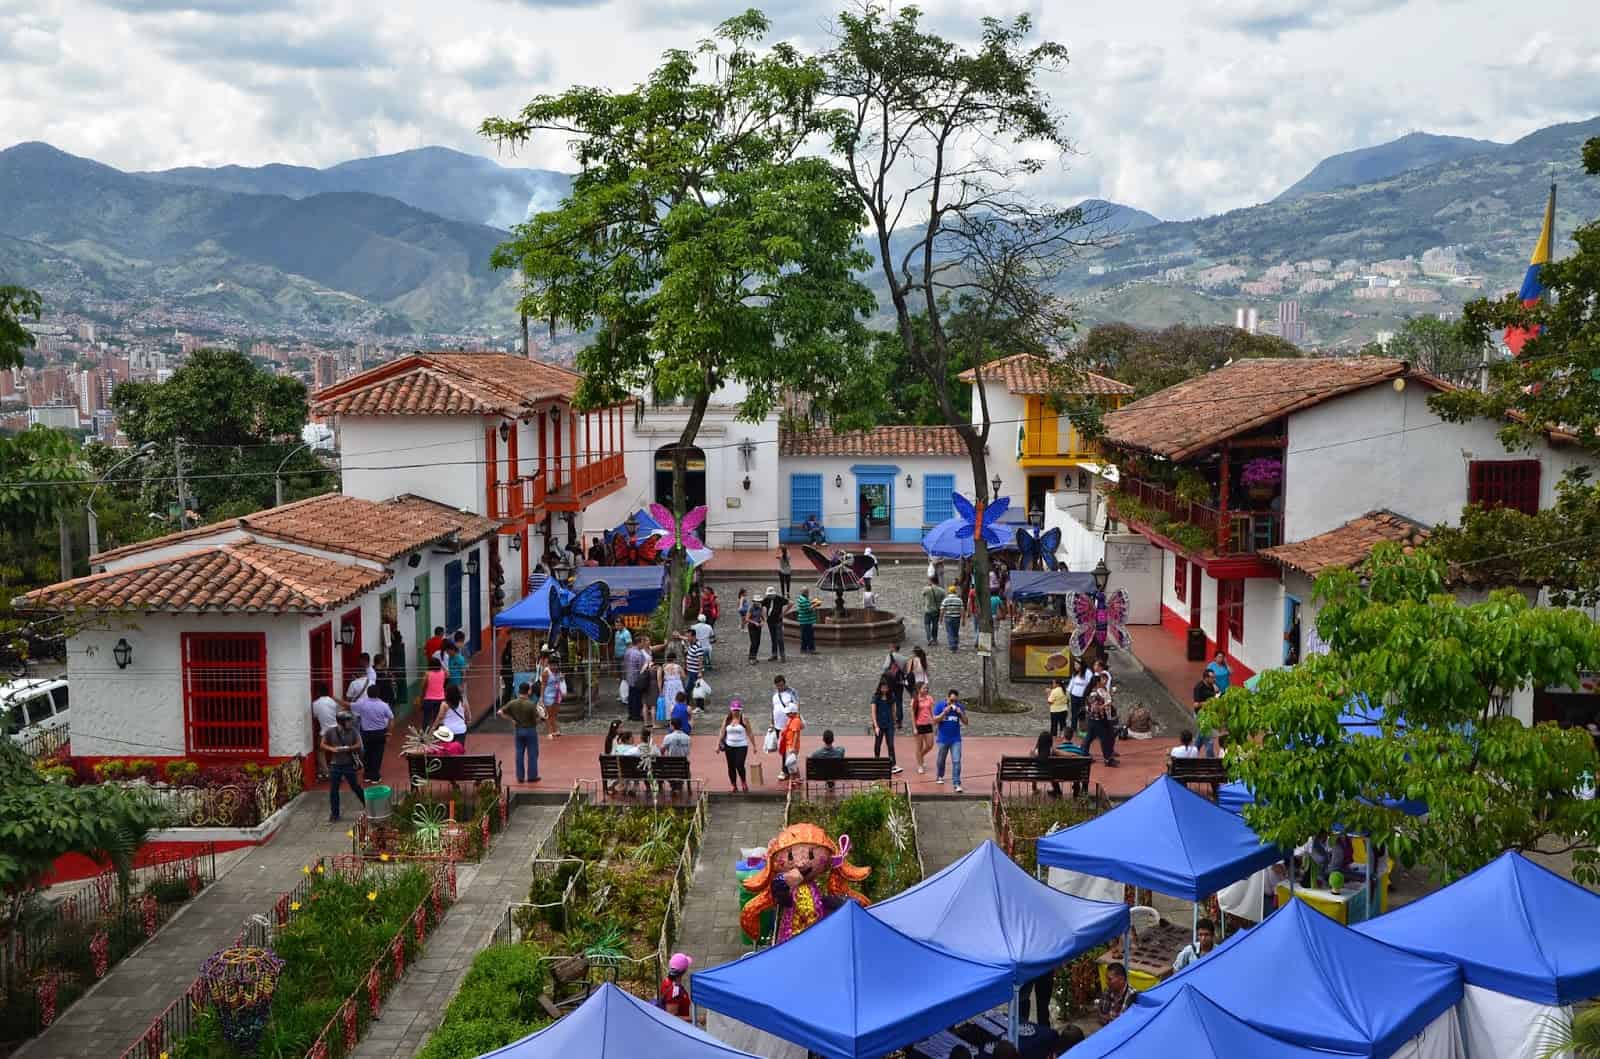 Pueblito Paisa in Medellín, Antioquia, Colombia